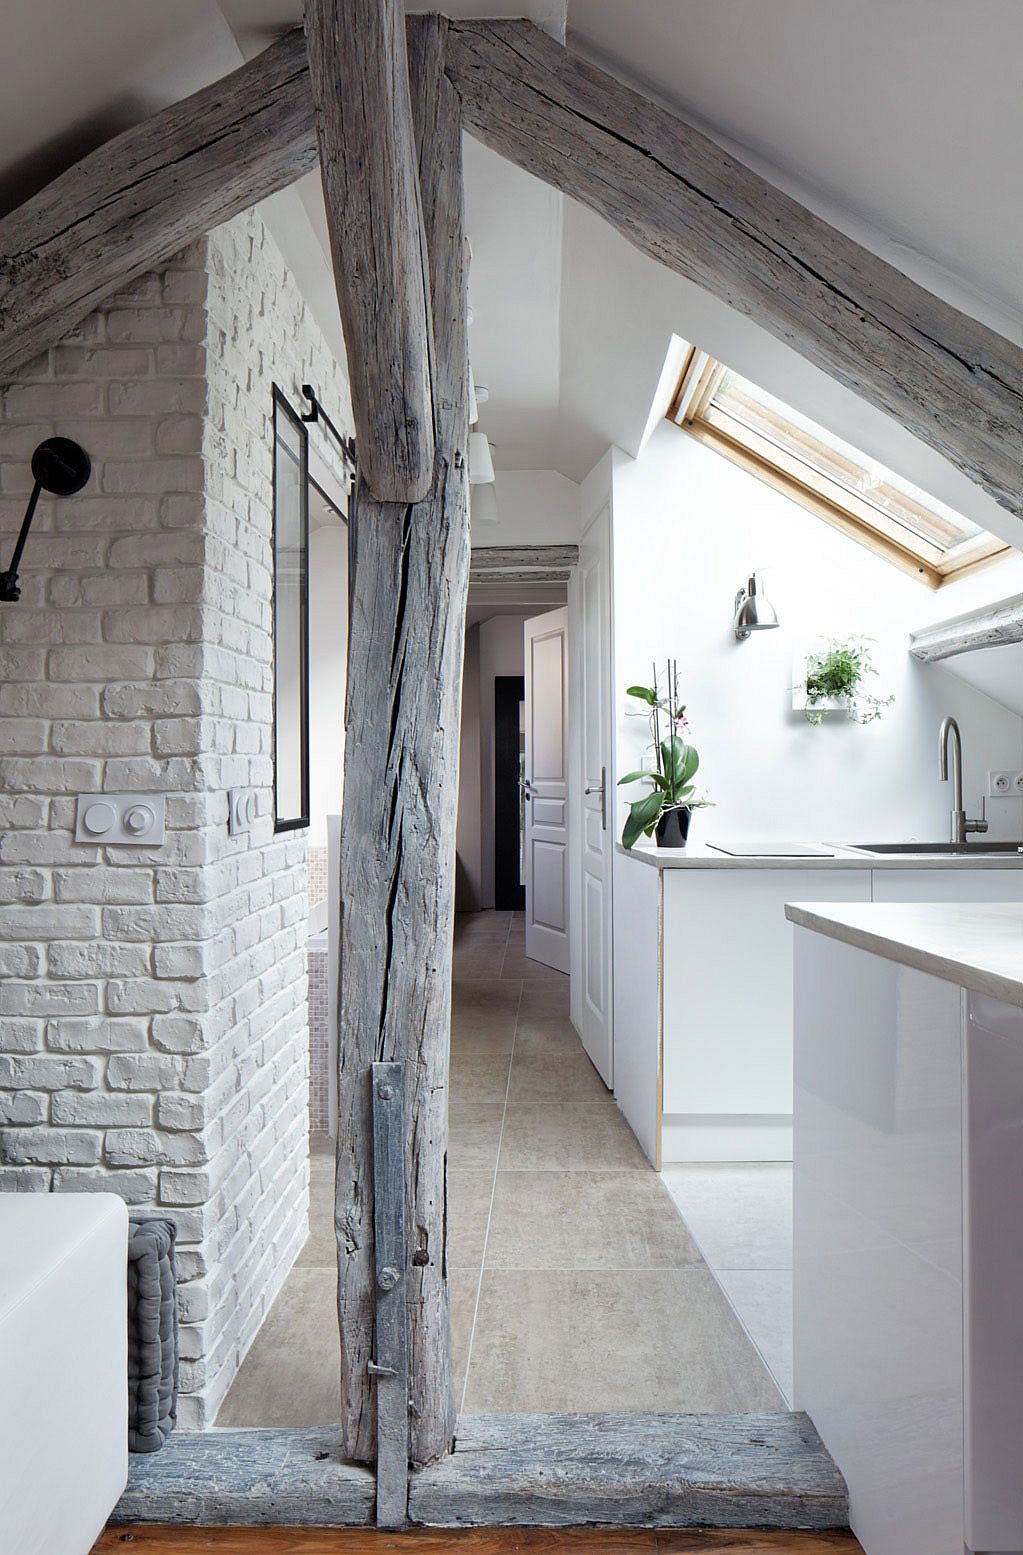 Rustic modern home renovation in Ivry-sur-Seine, France